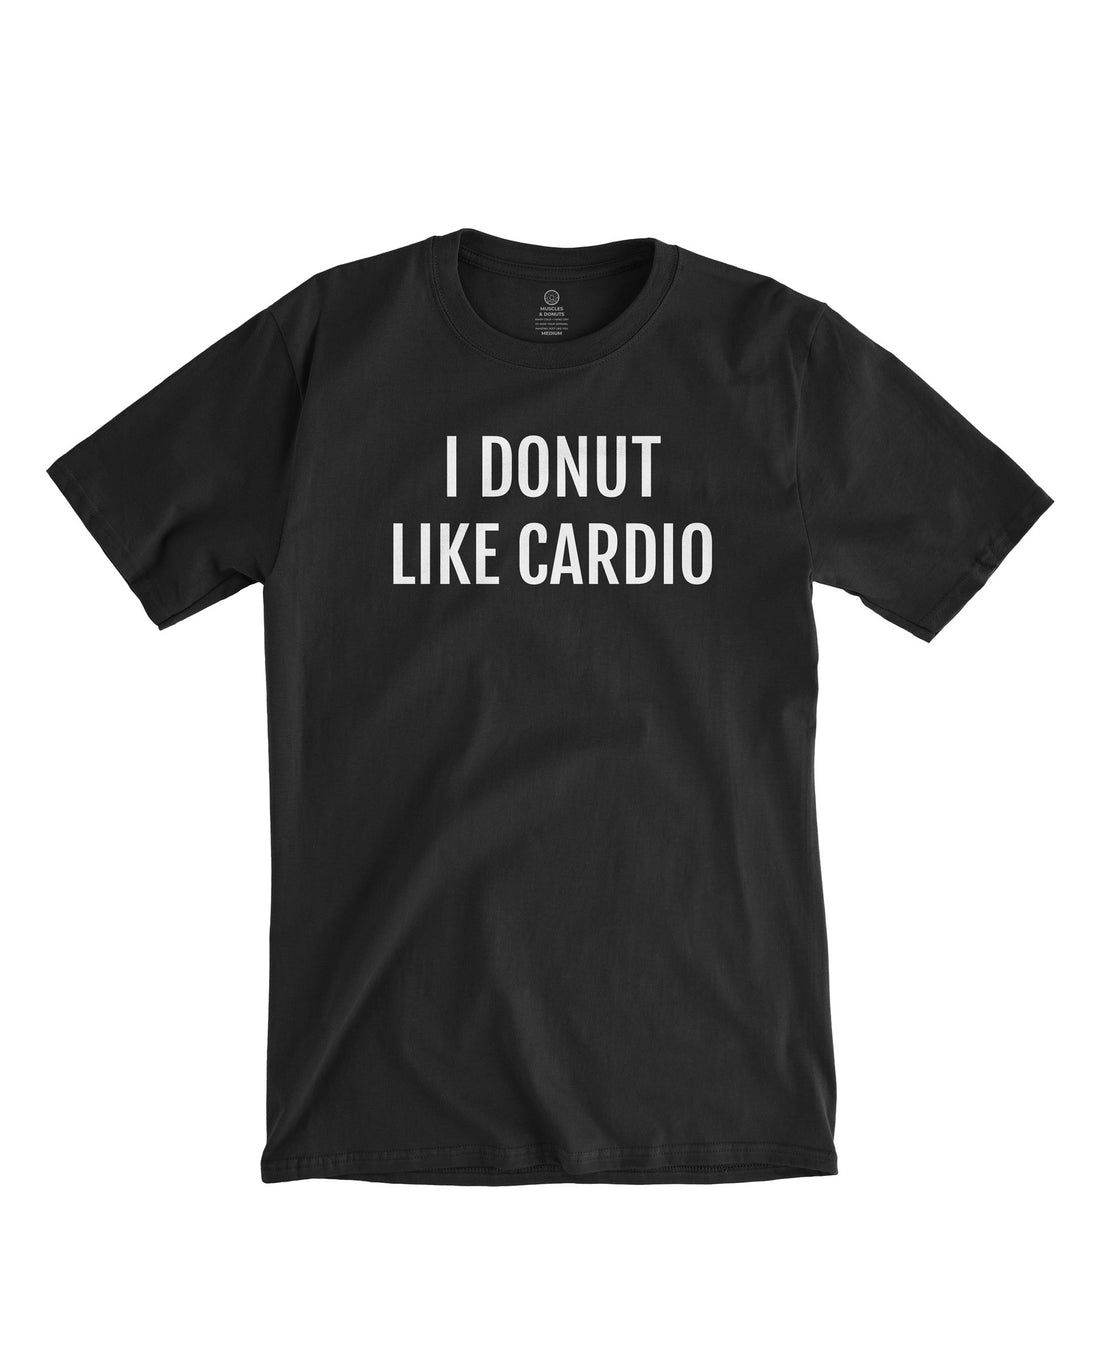 I Donut Like Cardio - Black Tee